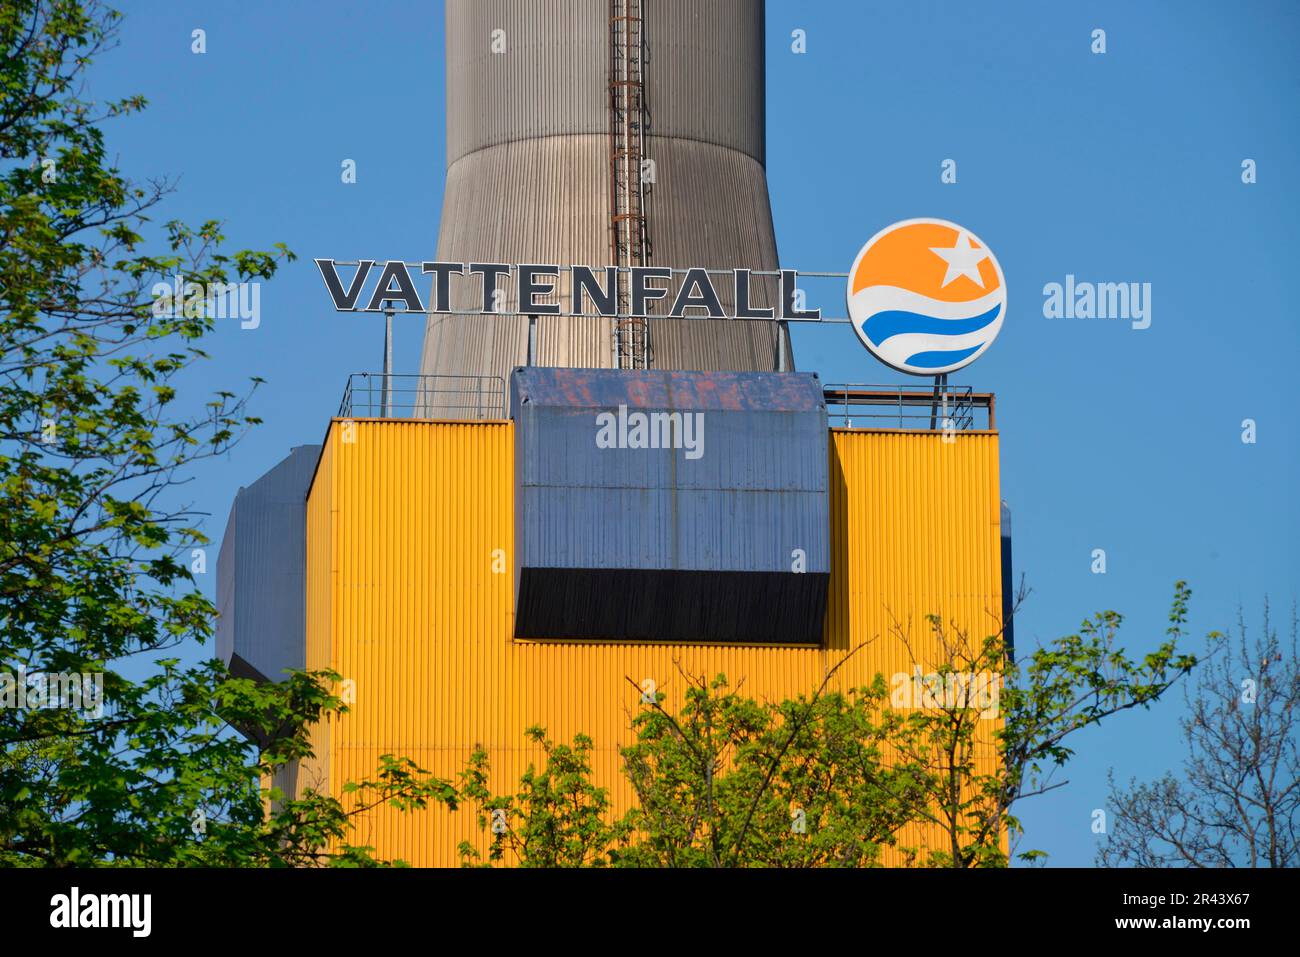 Vattenfall, combined heat and power plant, Forckenbeckstrasse, Wilmersdorf, Berlin, Germany Stock Photo